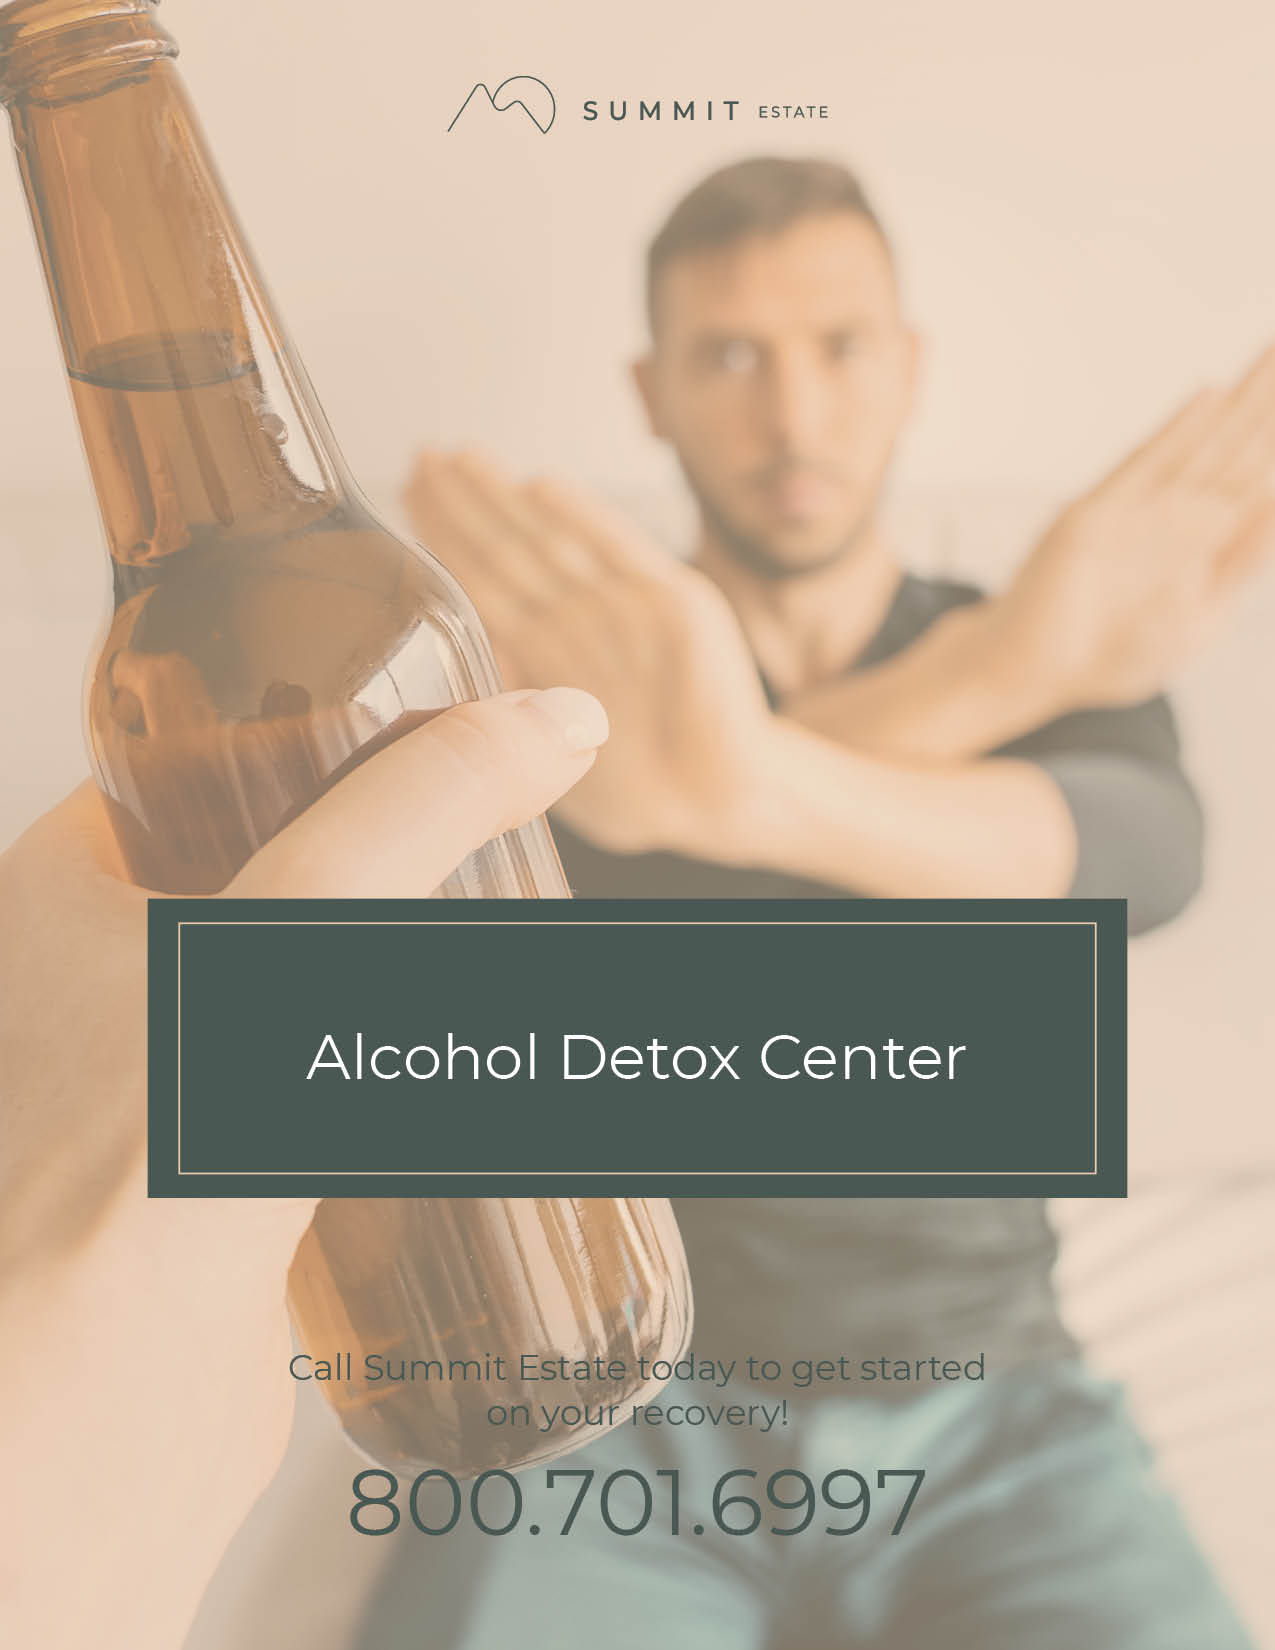 summit estate alcohol detox center